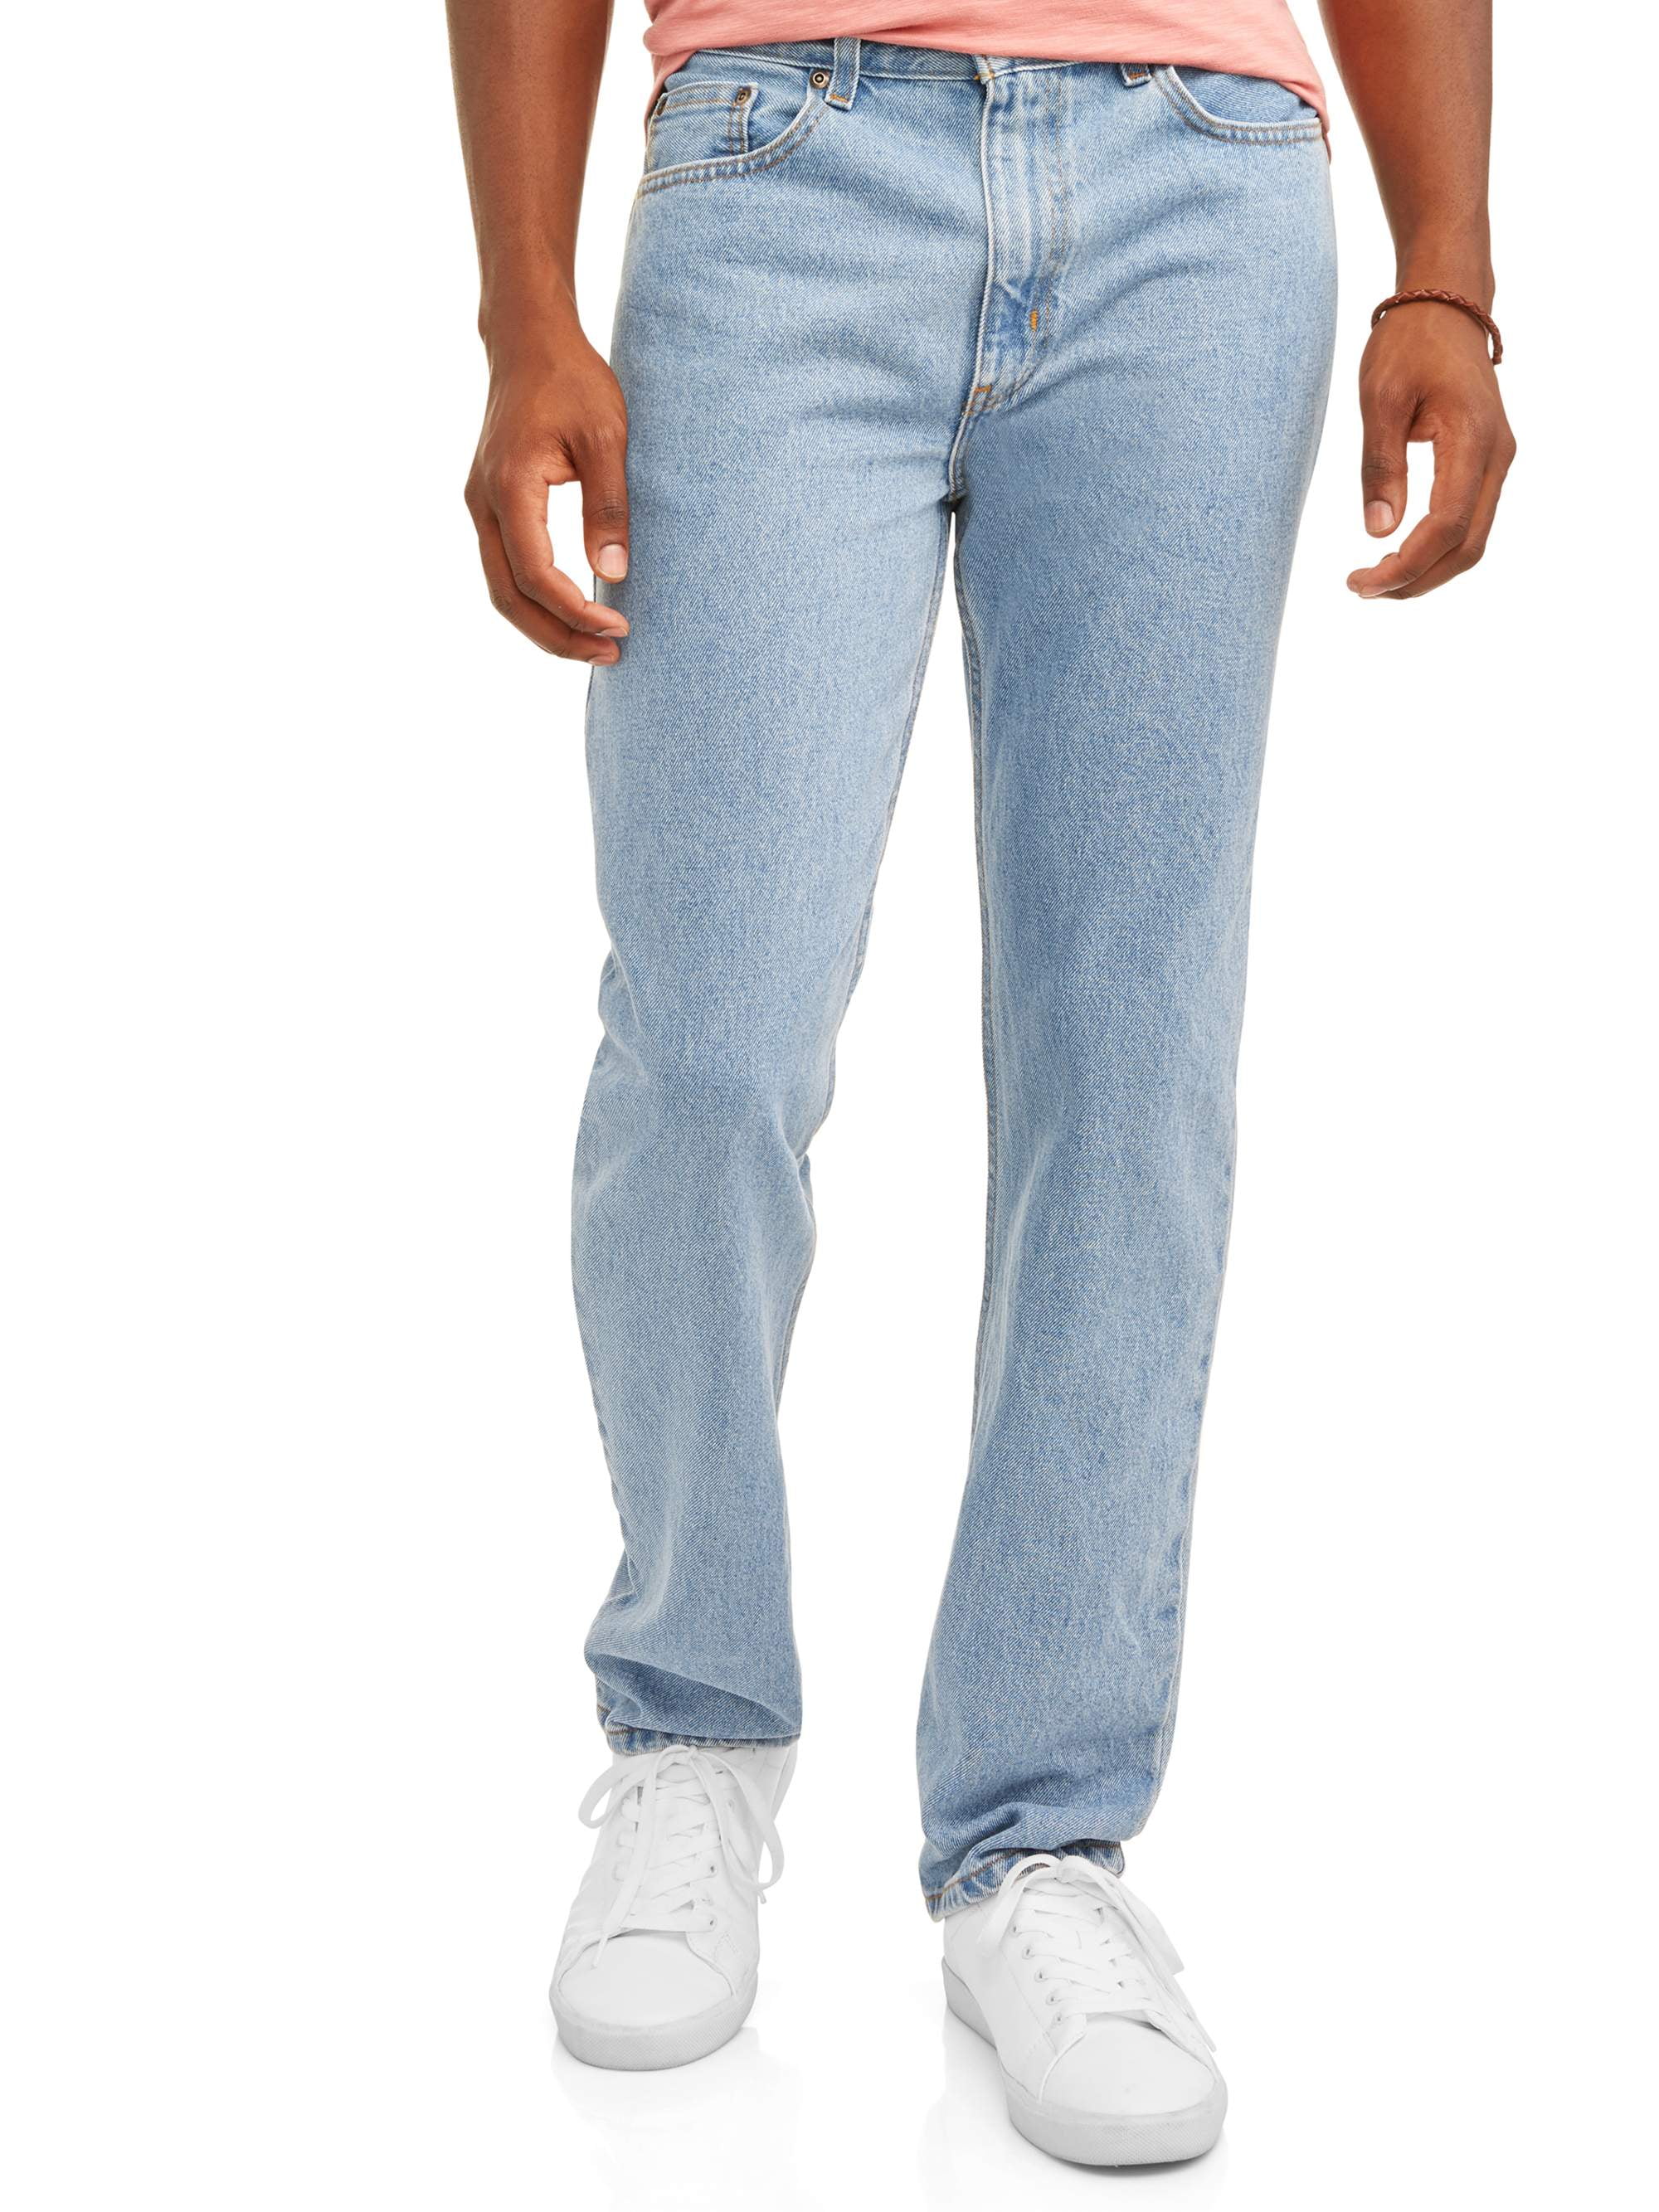 George Men's and Big Men's 100% Cotton Regular Fit Jeans 